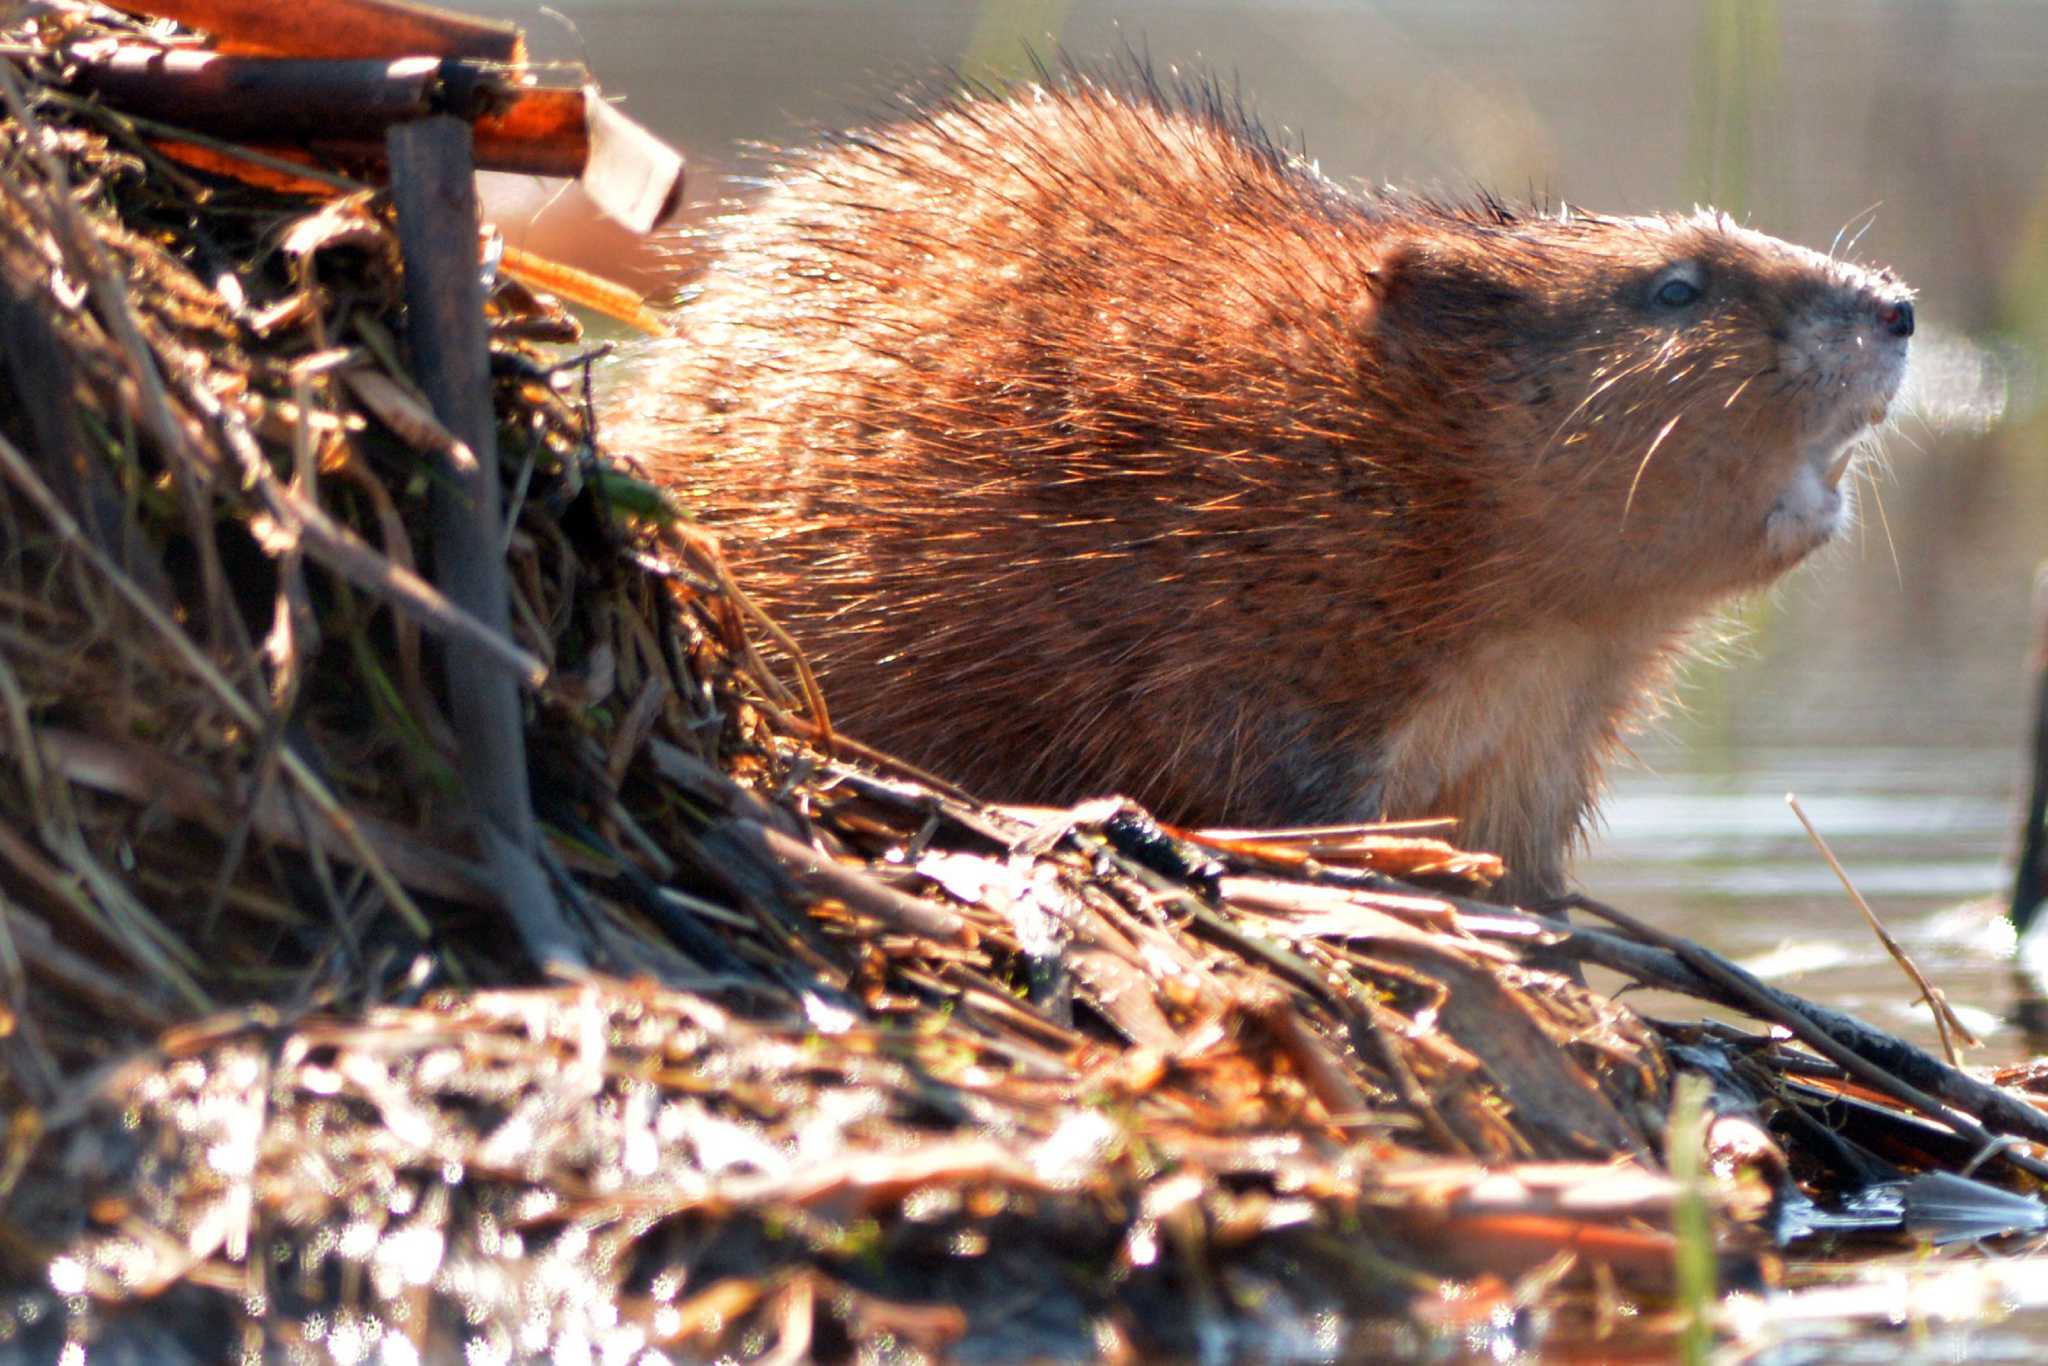 Beaver hunt photos